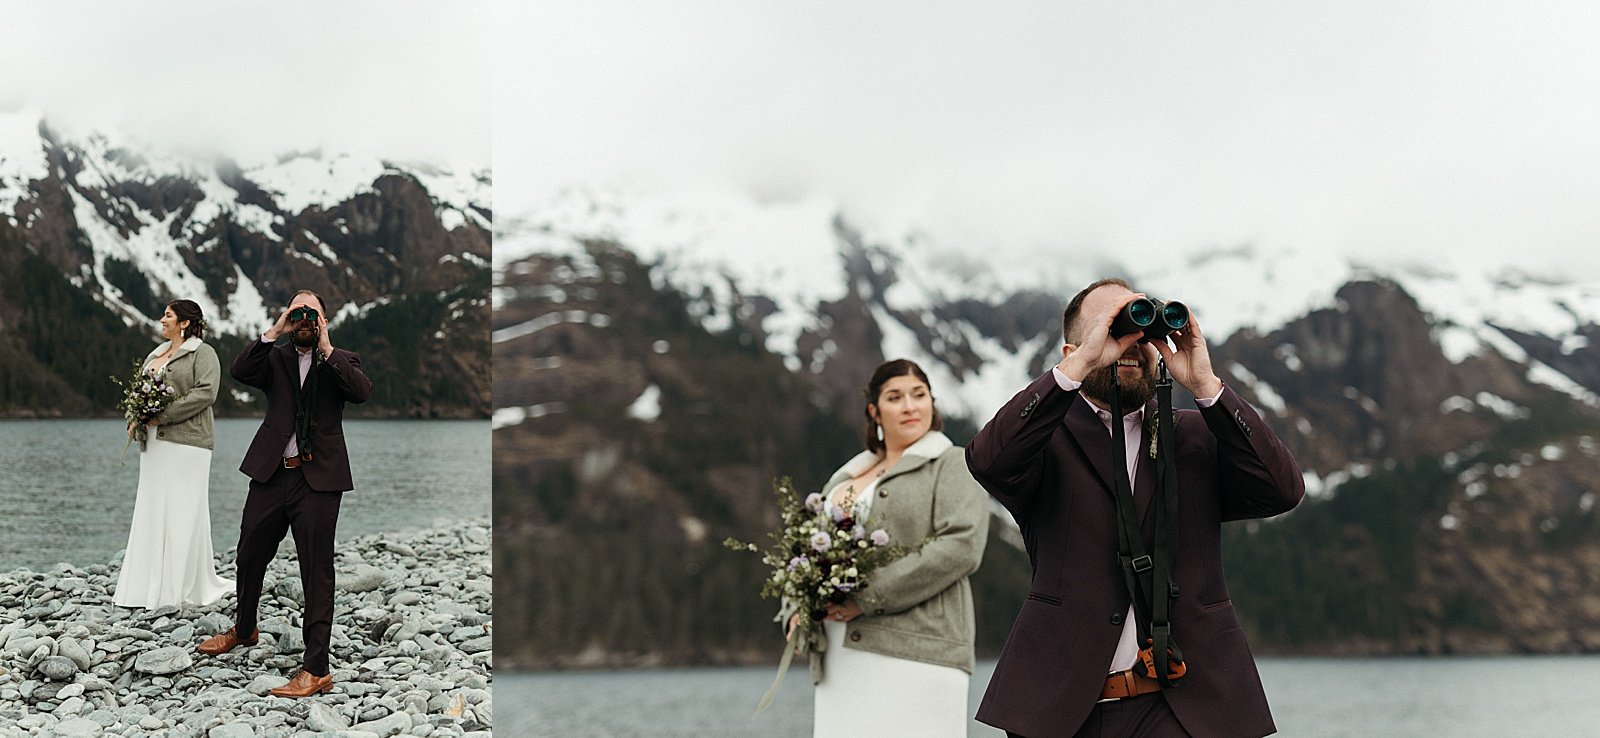  Bride and groom looking through binoculars by Rachel Struve Photography 